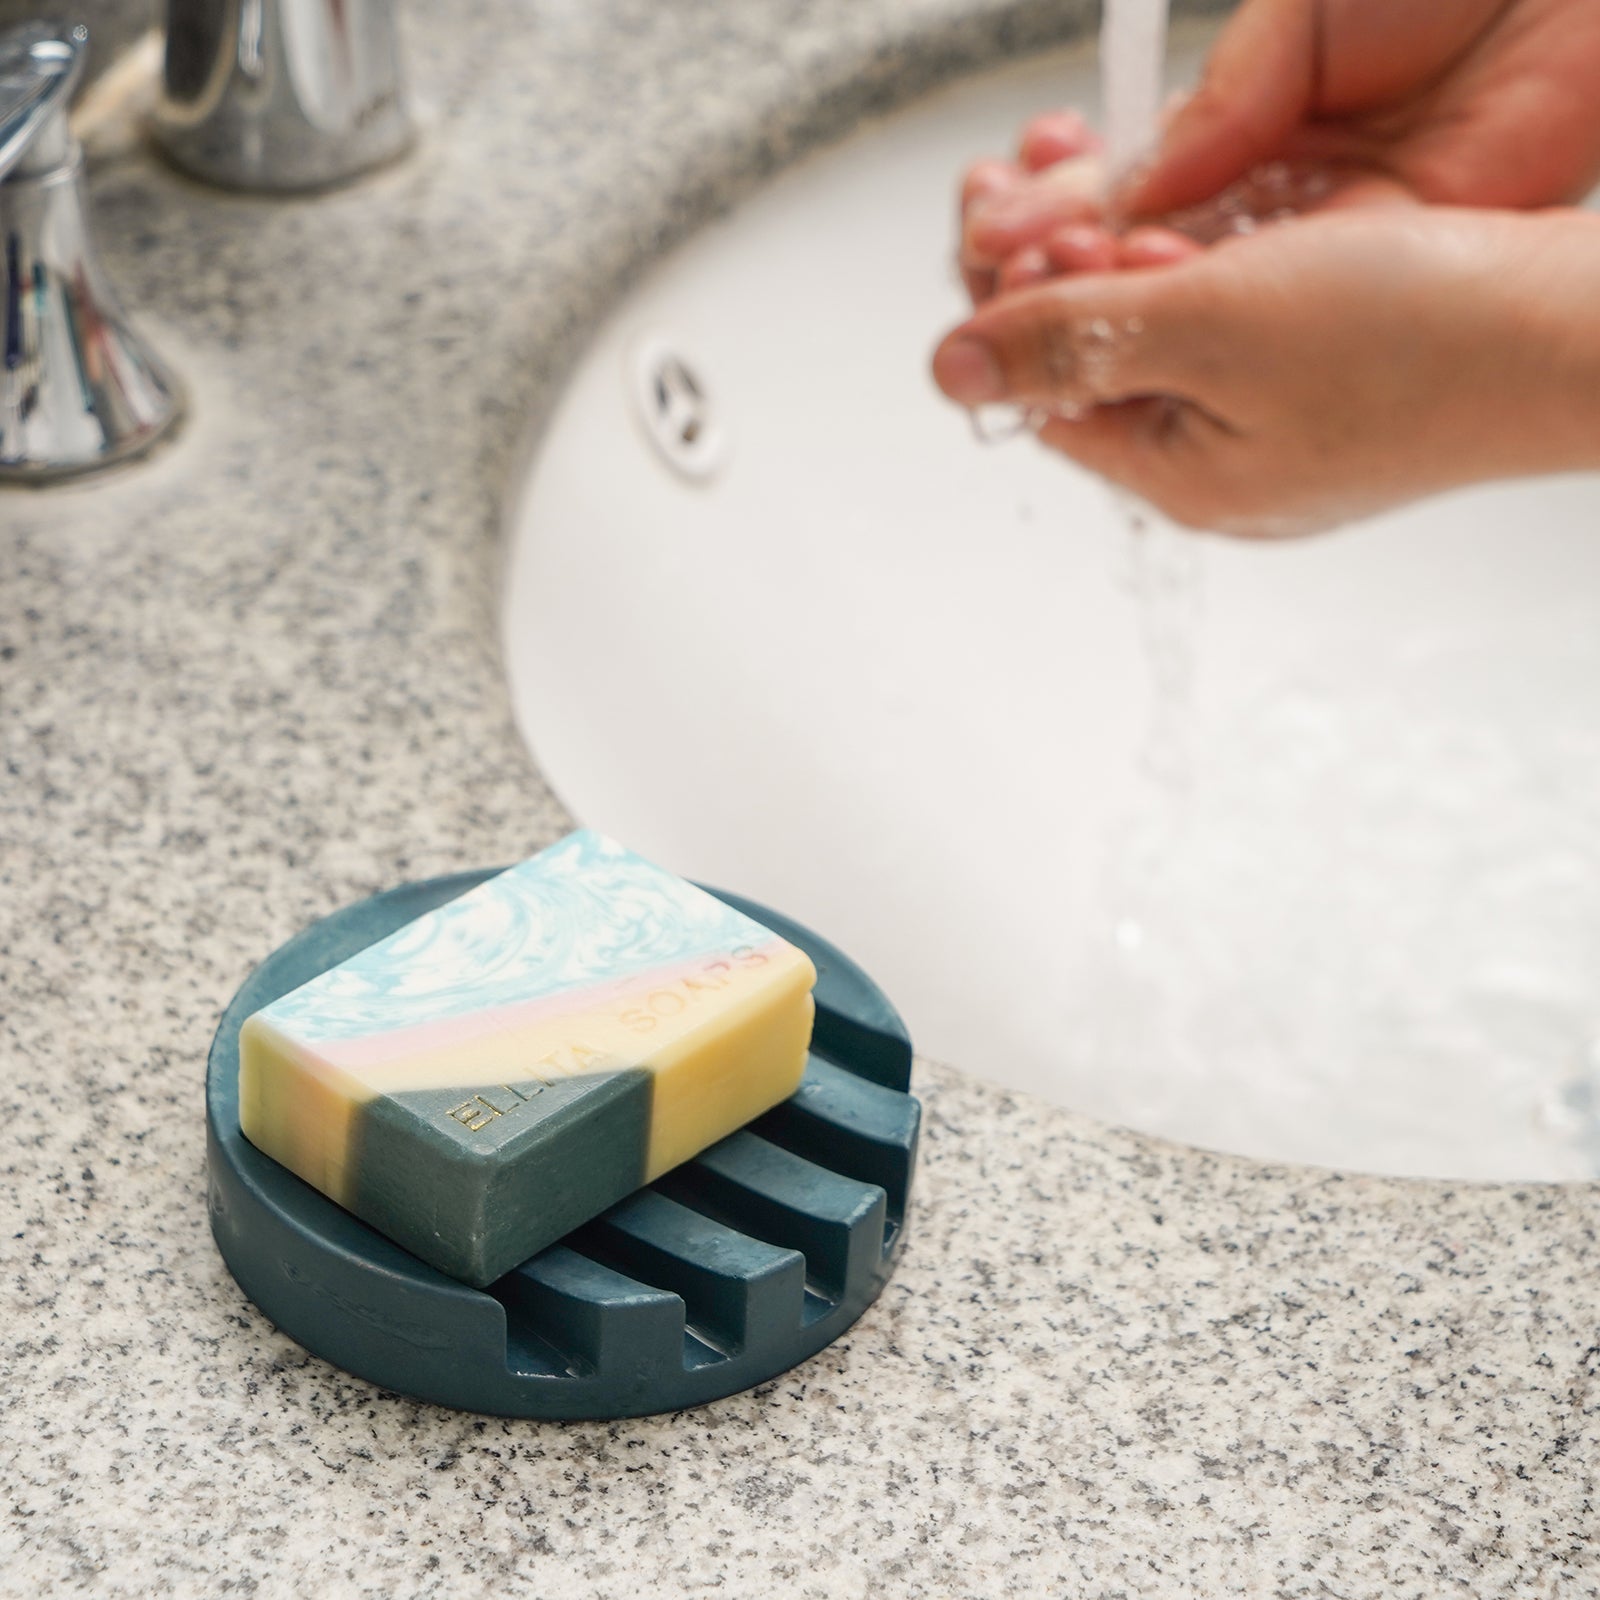 Wavy soap dish silicone mold